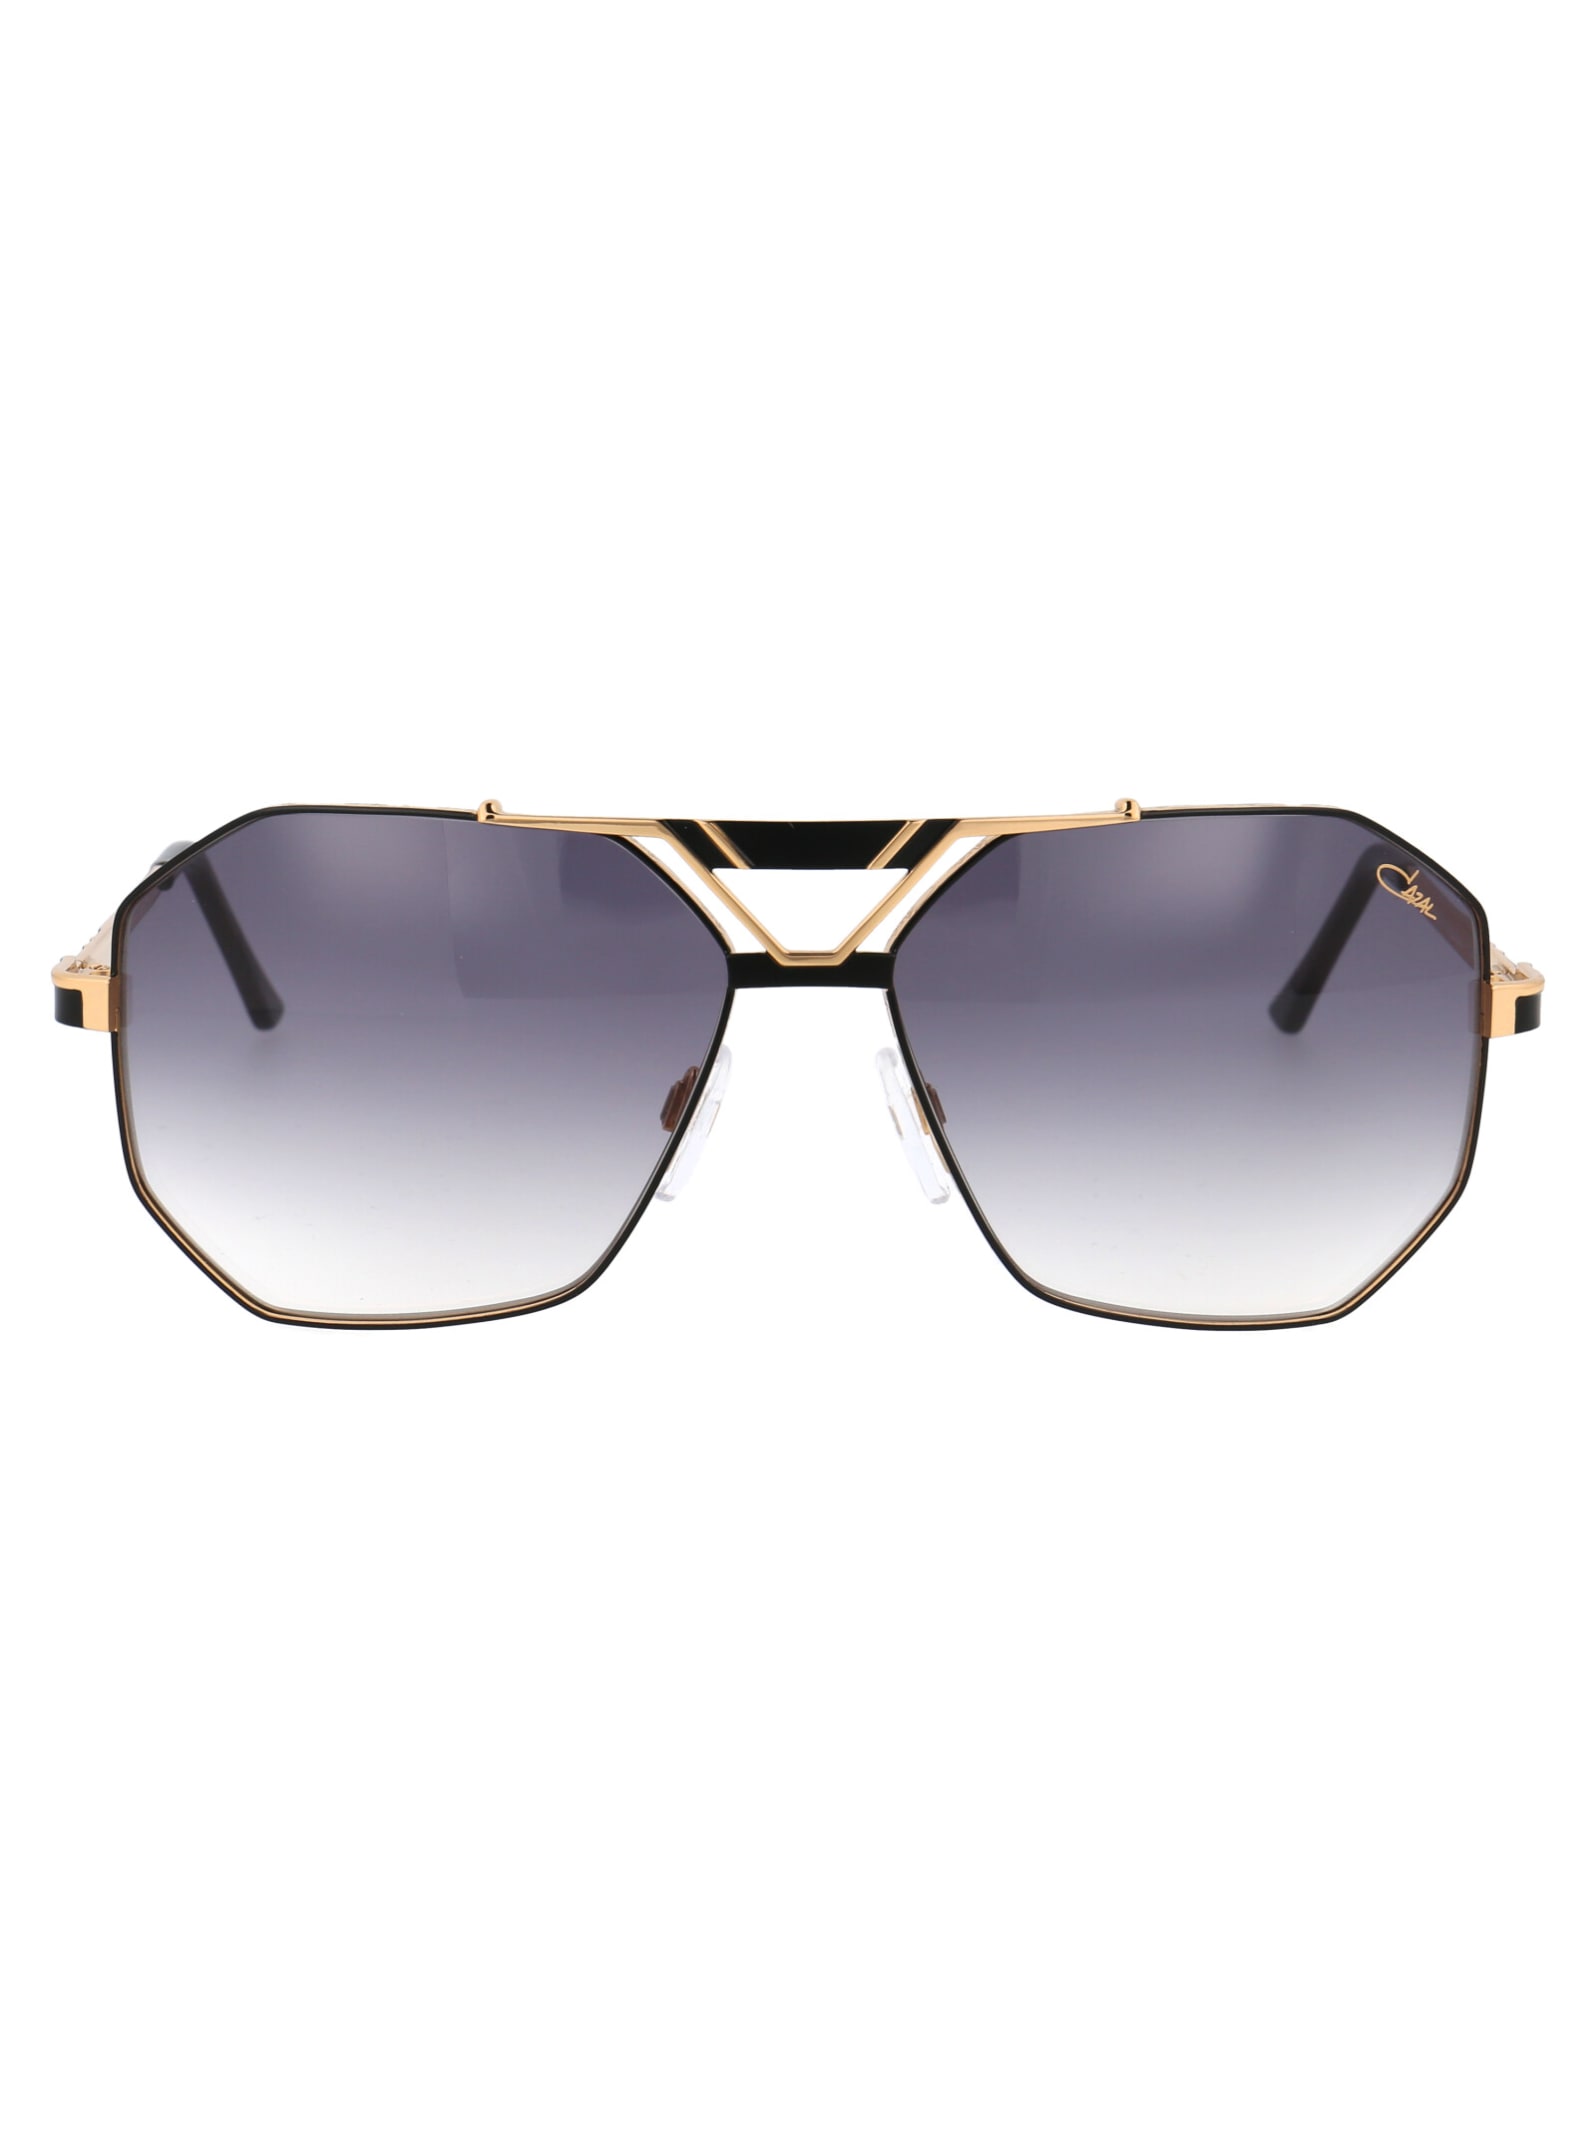 Cazal Mod. 9058 Sunglasses